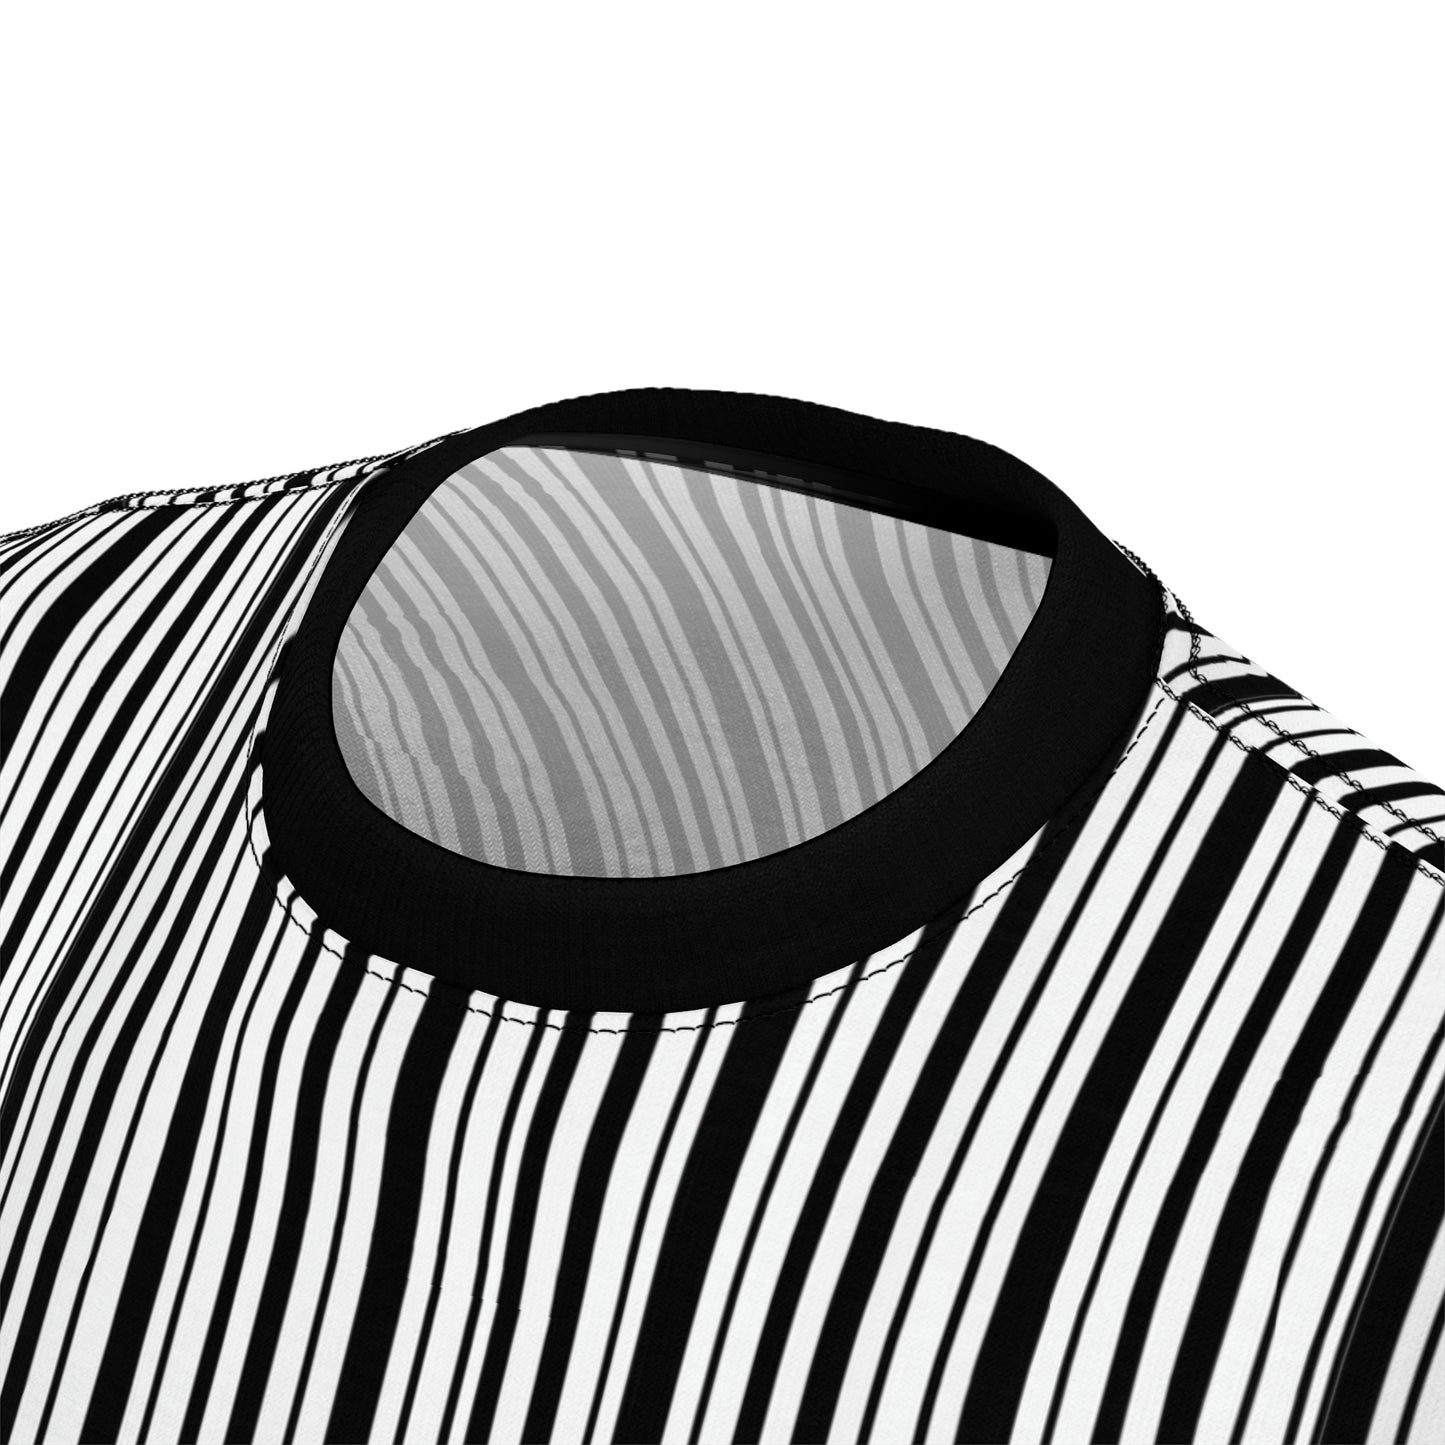 Black White Striped Tshirt, Vertical Stripe Designer Graphic Aesthetic Fashion Crewneck Men Women Tee Top Short Sleeve Shirt Starcove Fashion